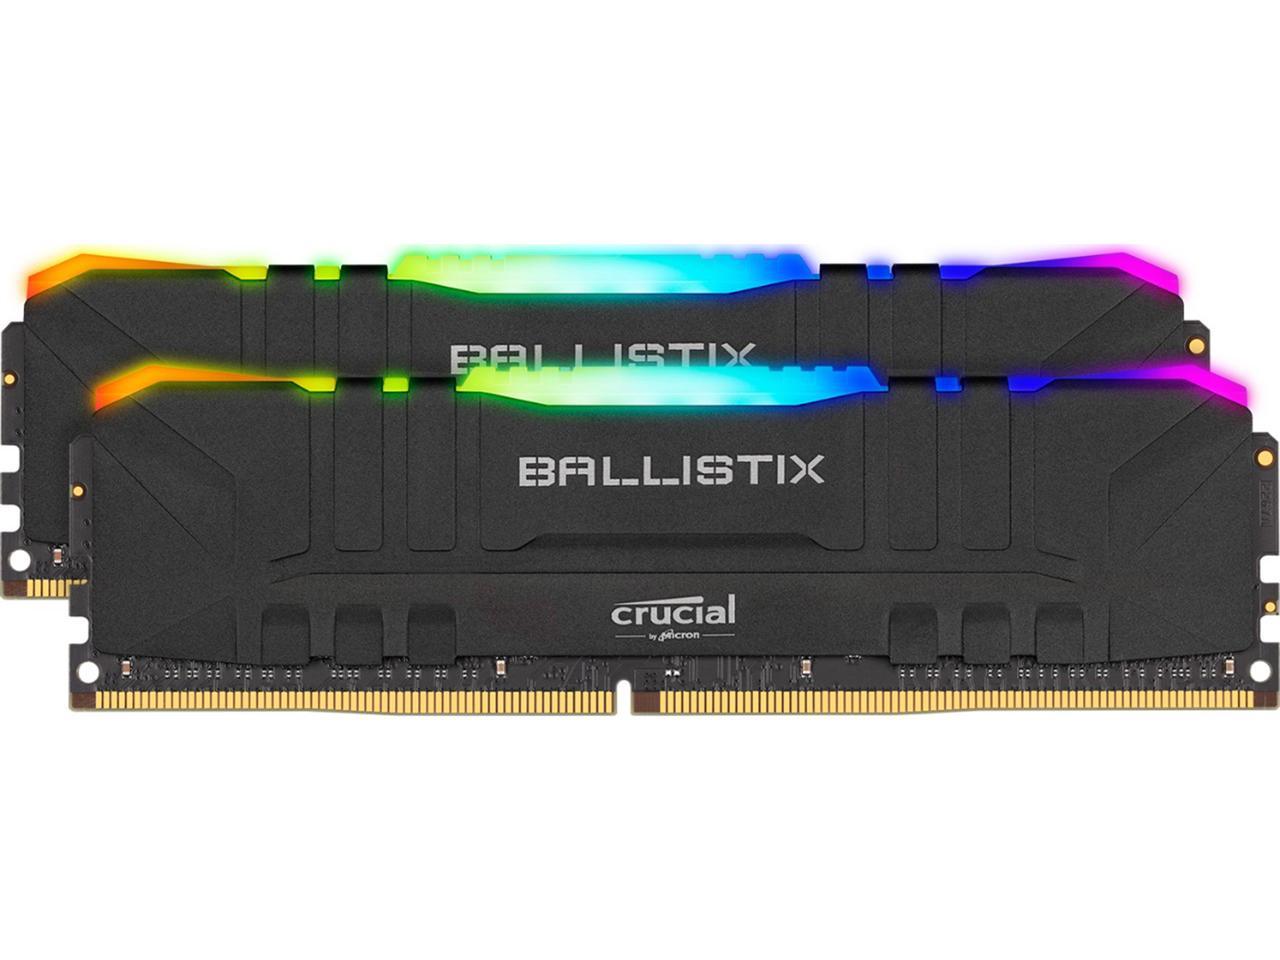 16GB (2x 8) Crucial Ballistix RGB DDR4 3600 CL16 Desktop RAM kit @Newegg $78.19